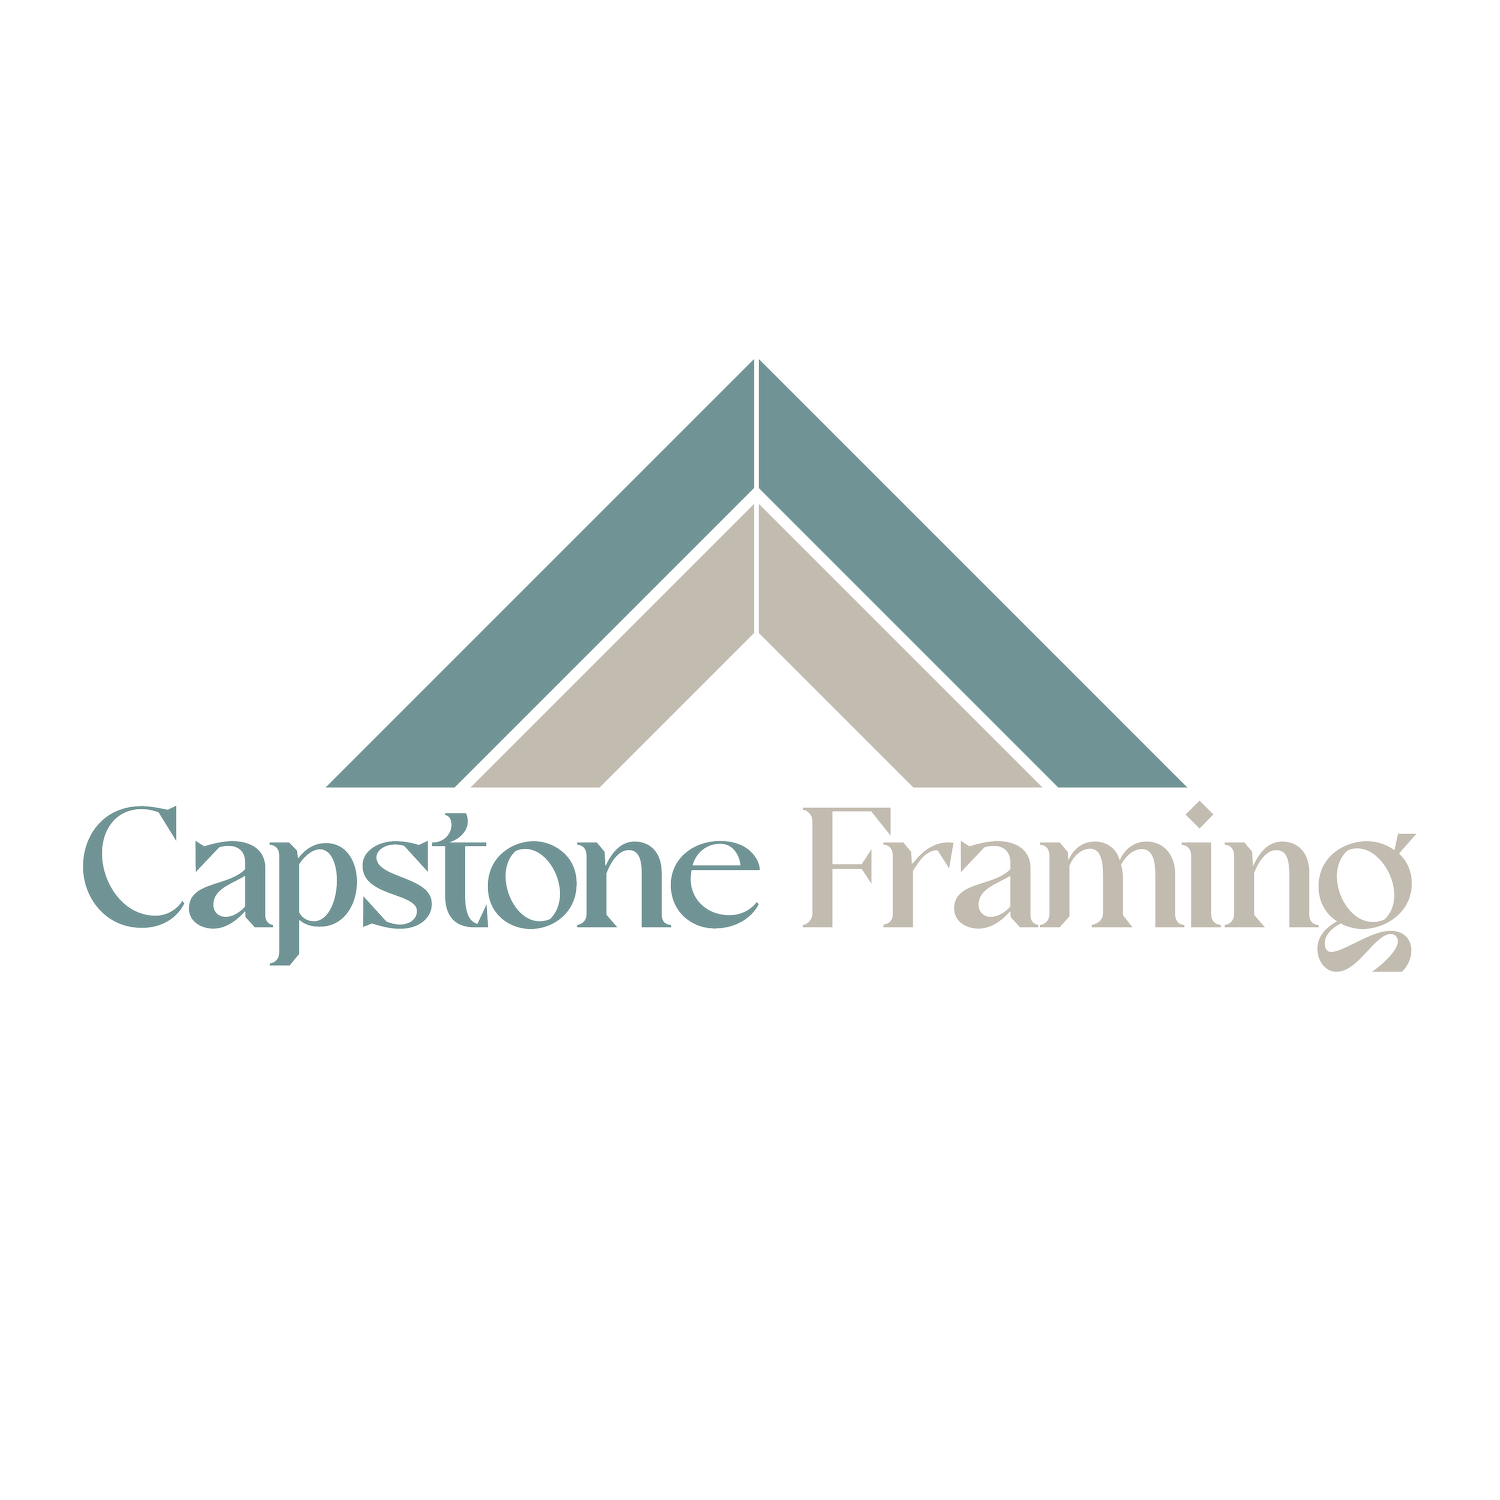 Capstone Framing